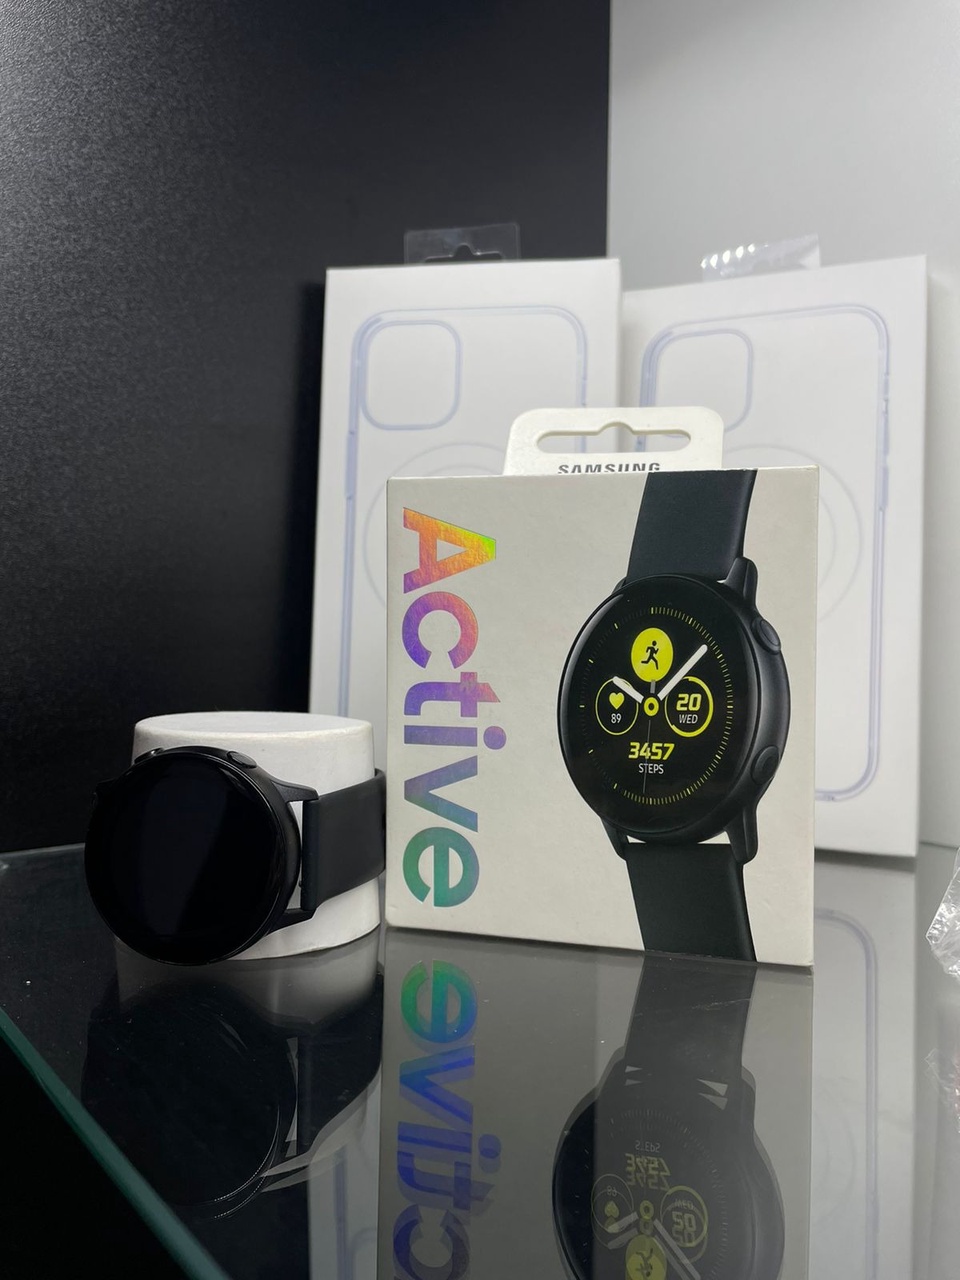 Samsung Galaxy Watch Active - 5 500 ₽, заказать онлайн.